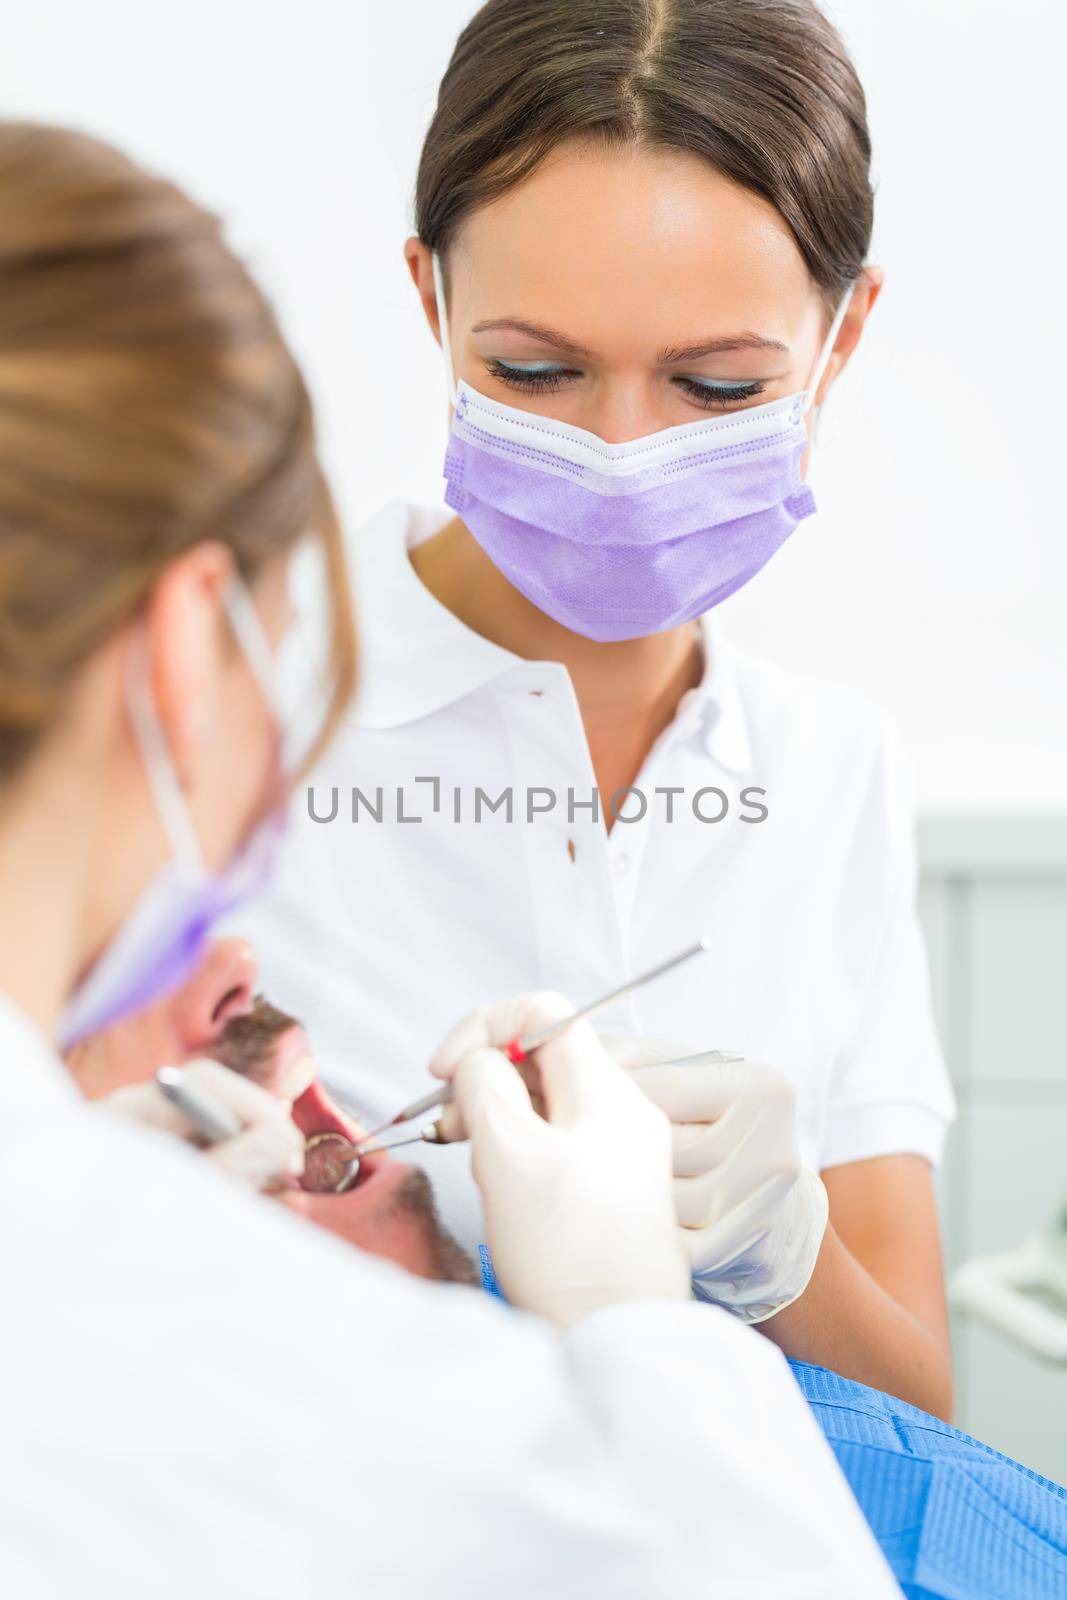 Patient with Dentist - dental treatment by Kzenon